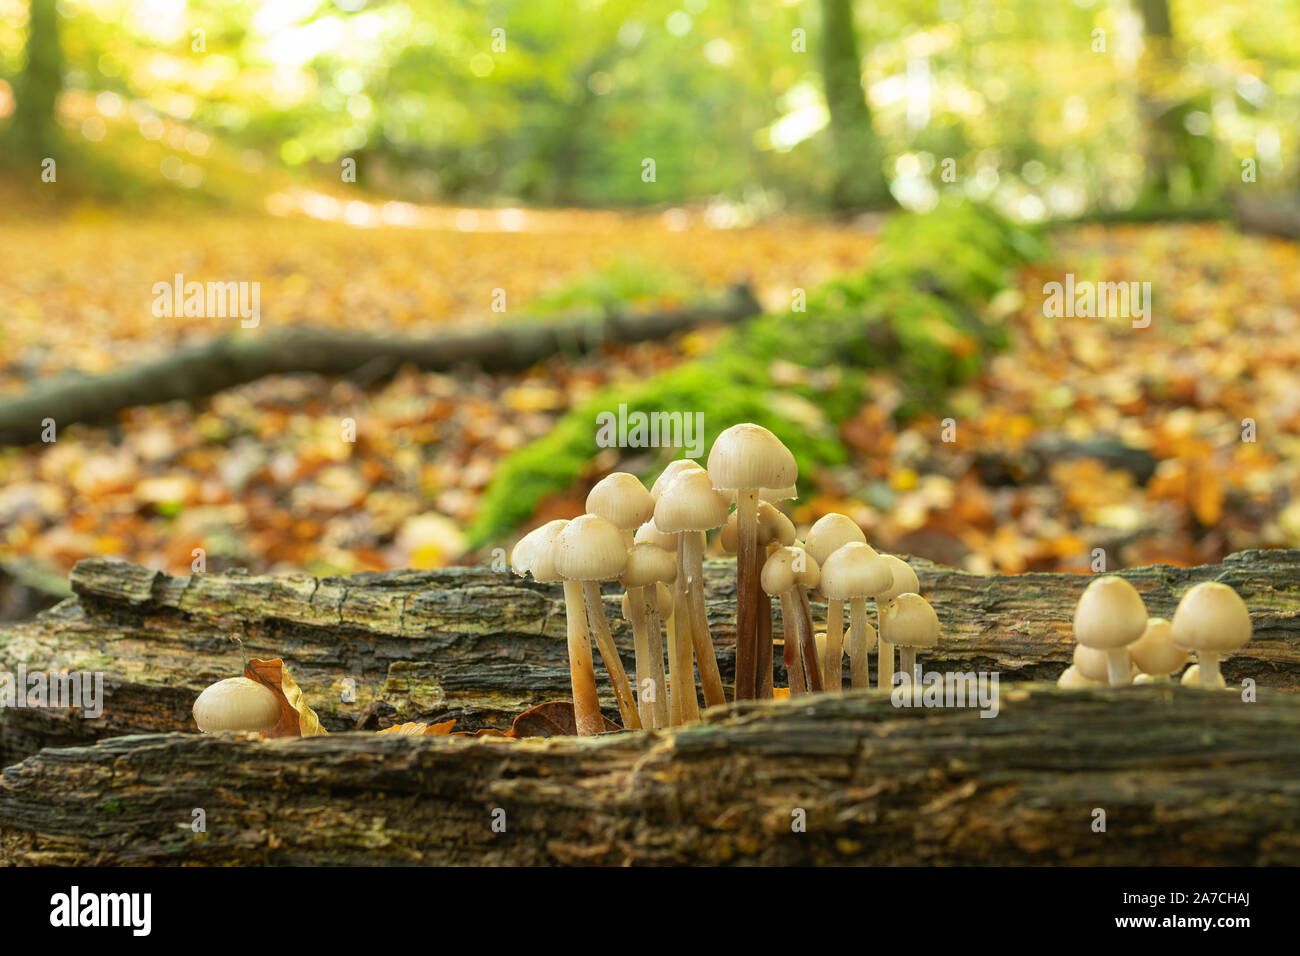 Clump of fungi on a rotting log in autumn woodland habitat at Burnham Beeches, UK Stock Photo